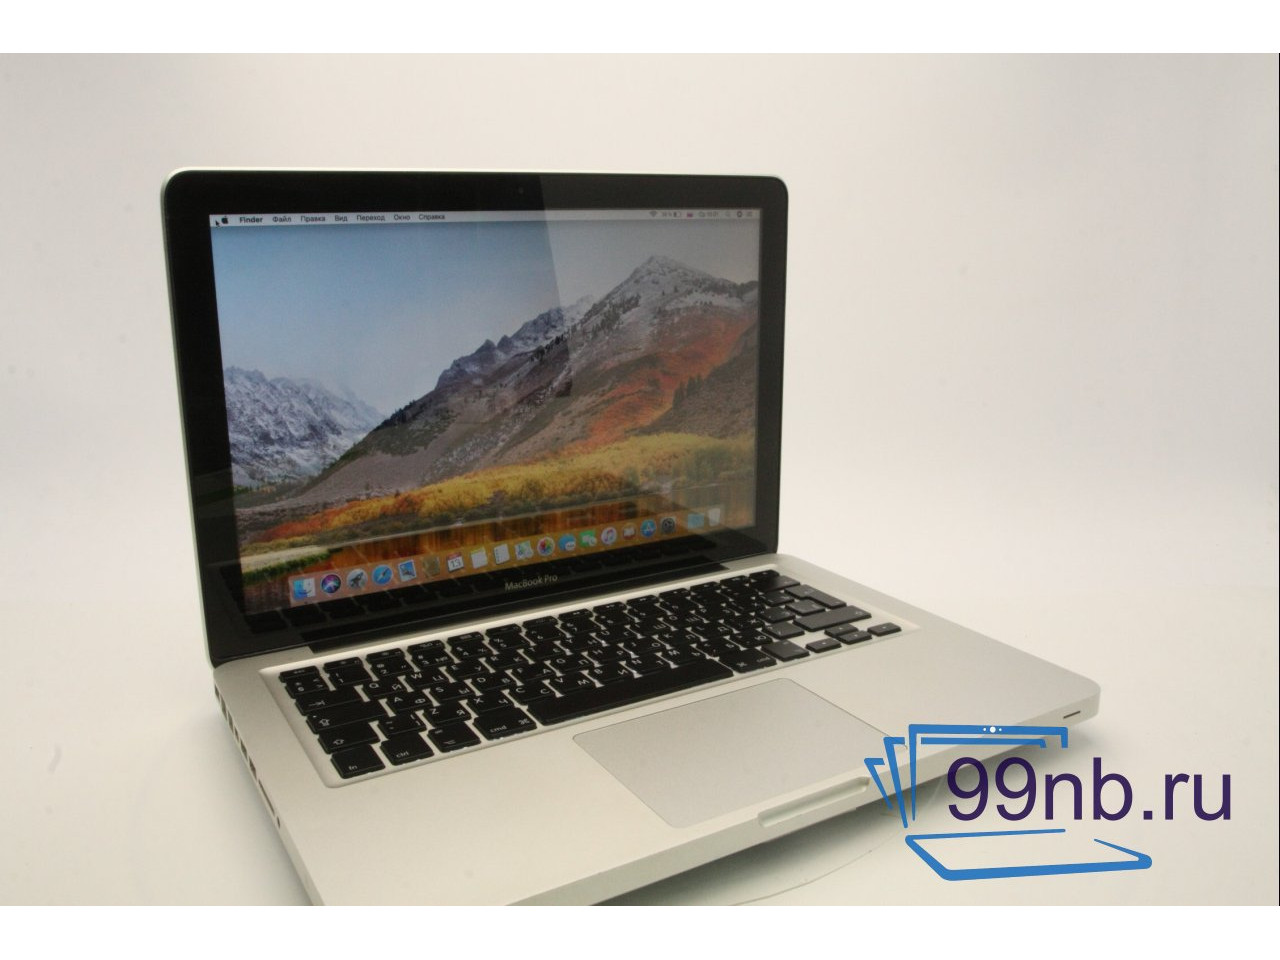 Macbook Pro 13 mid 2012